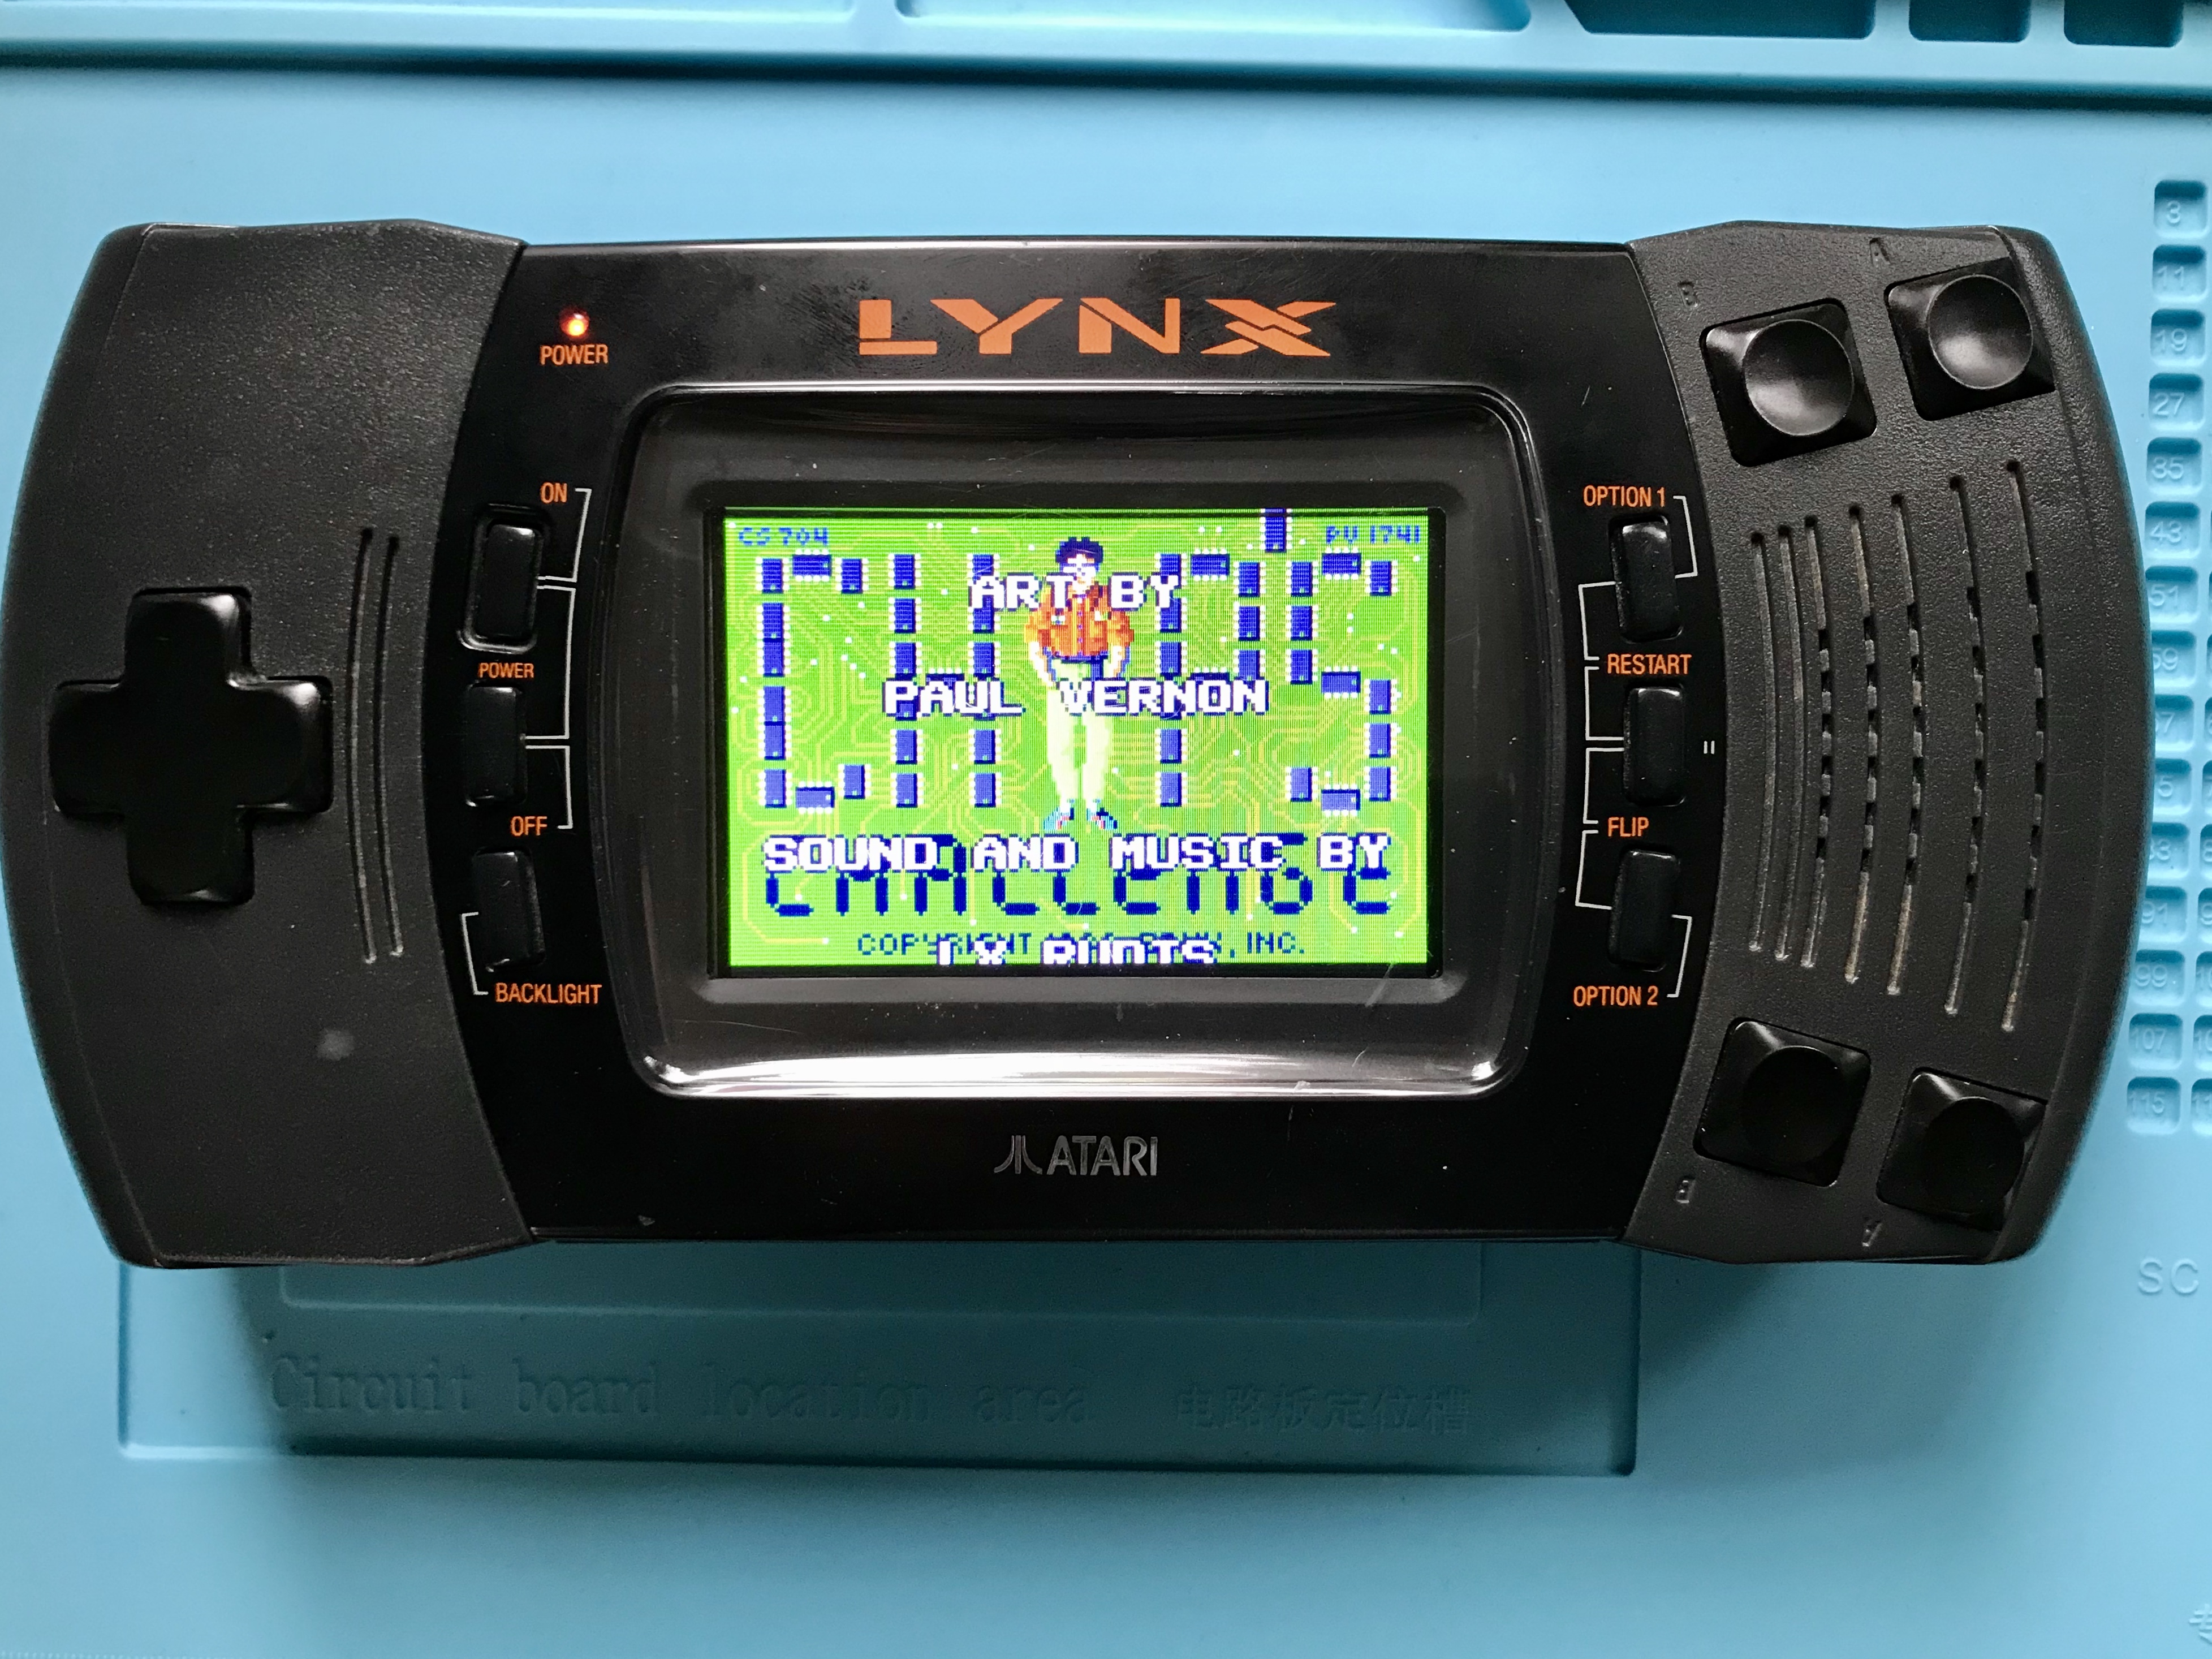 Atari Lynx II with BennVenn aftermarket LCD